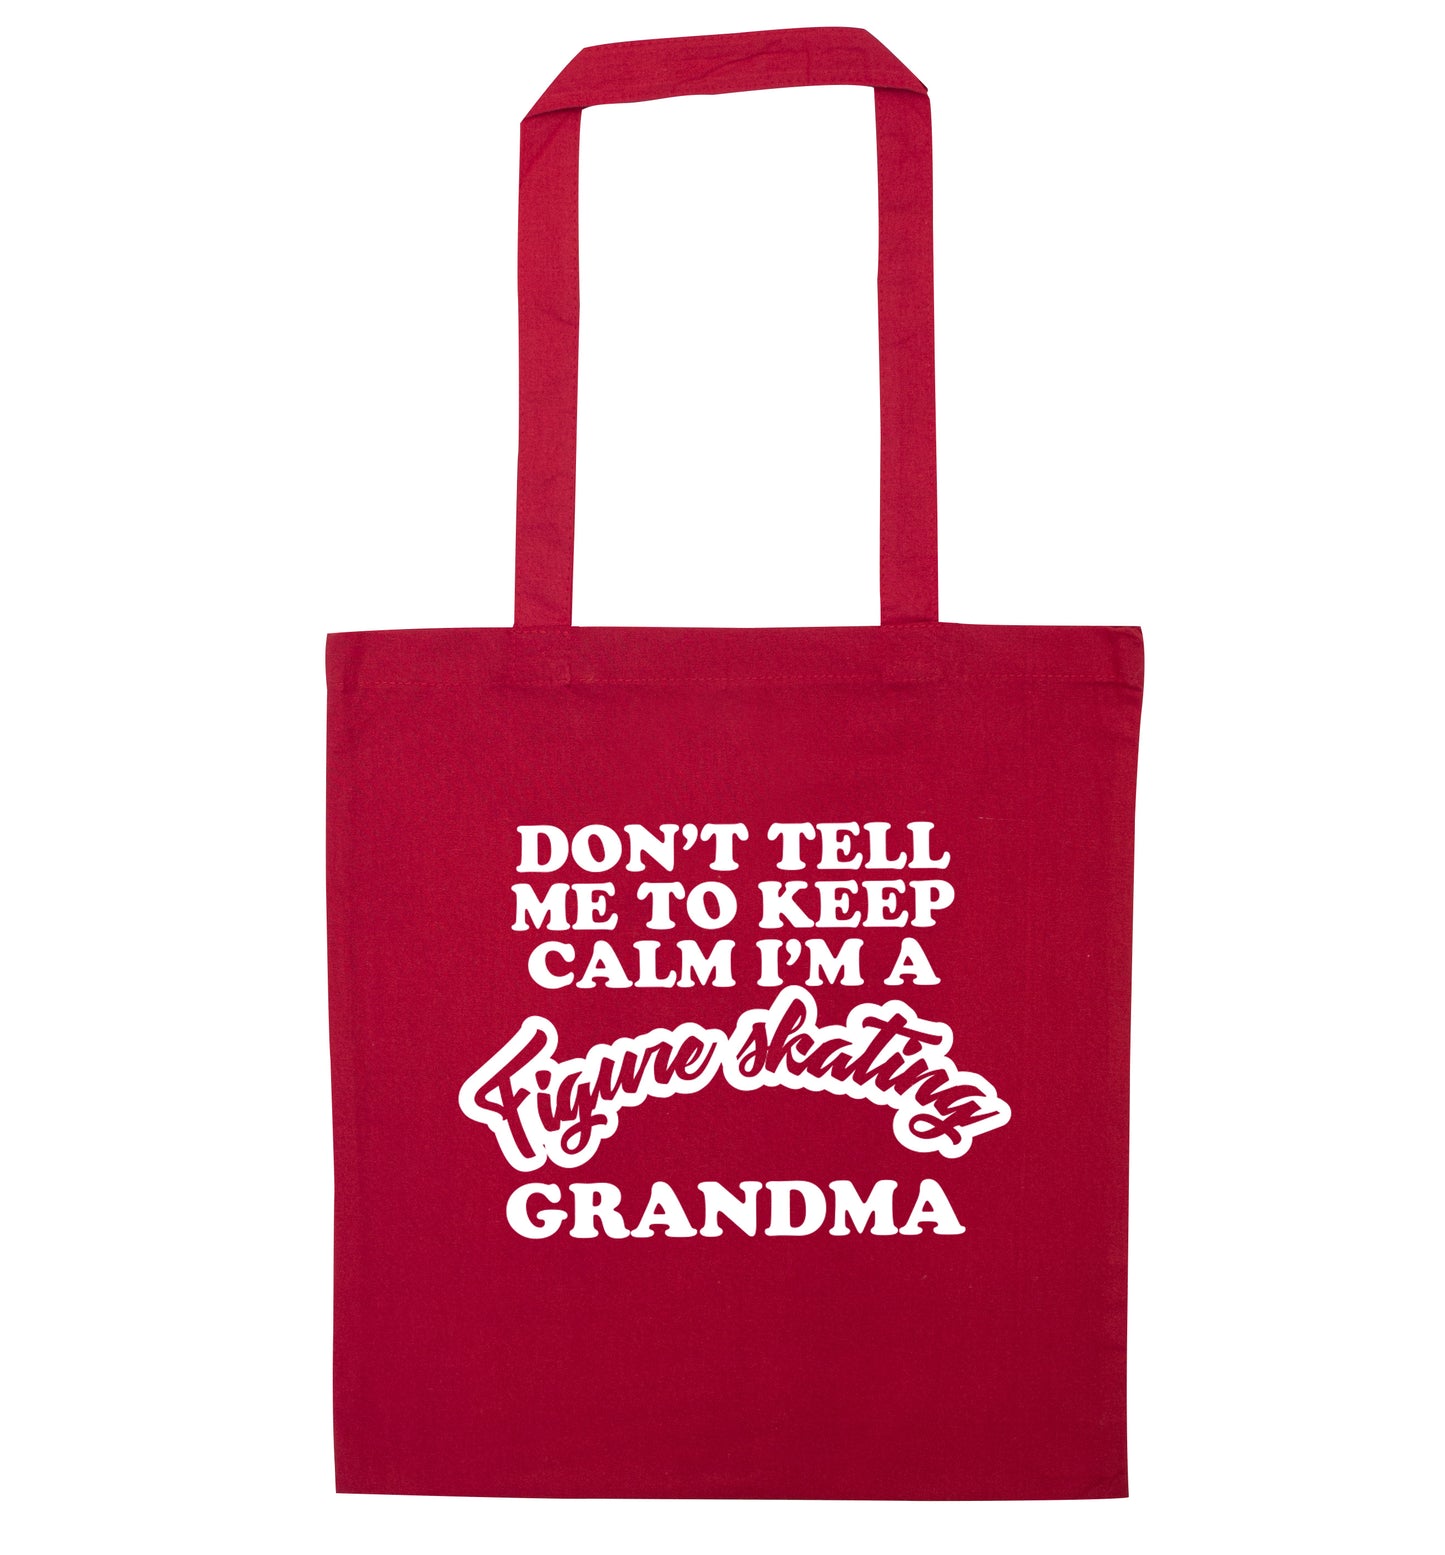 Don't tell me to keep calm I'm a figure skating grandma red tote bag